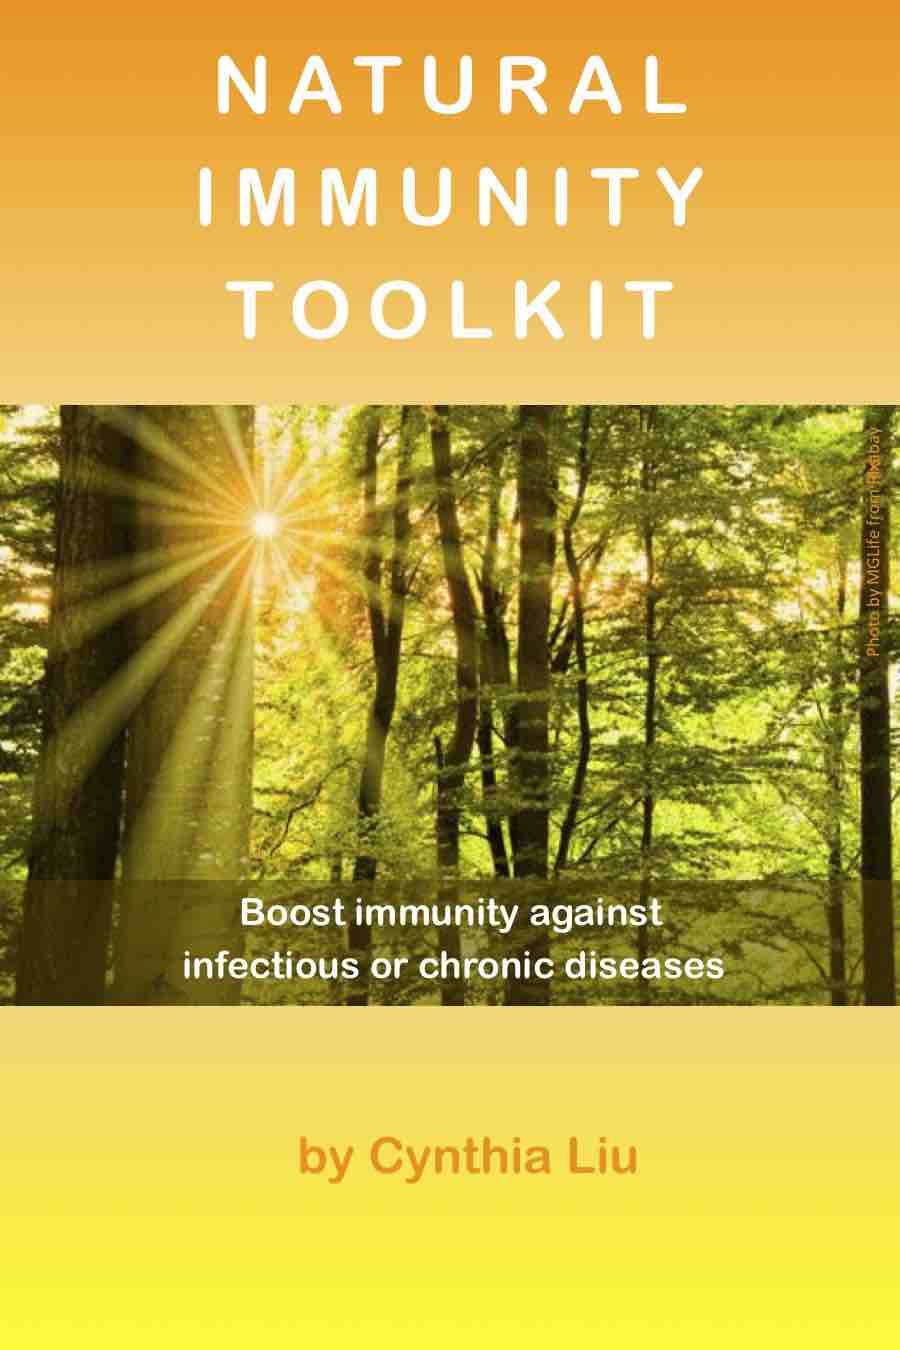 Immunity Toolkit book by Cynthia Liu